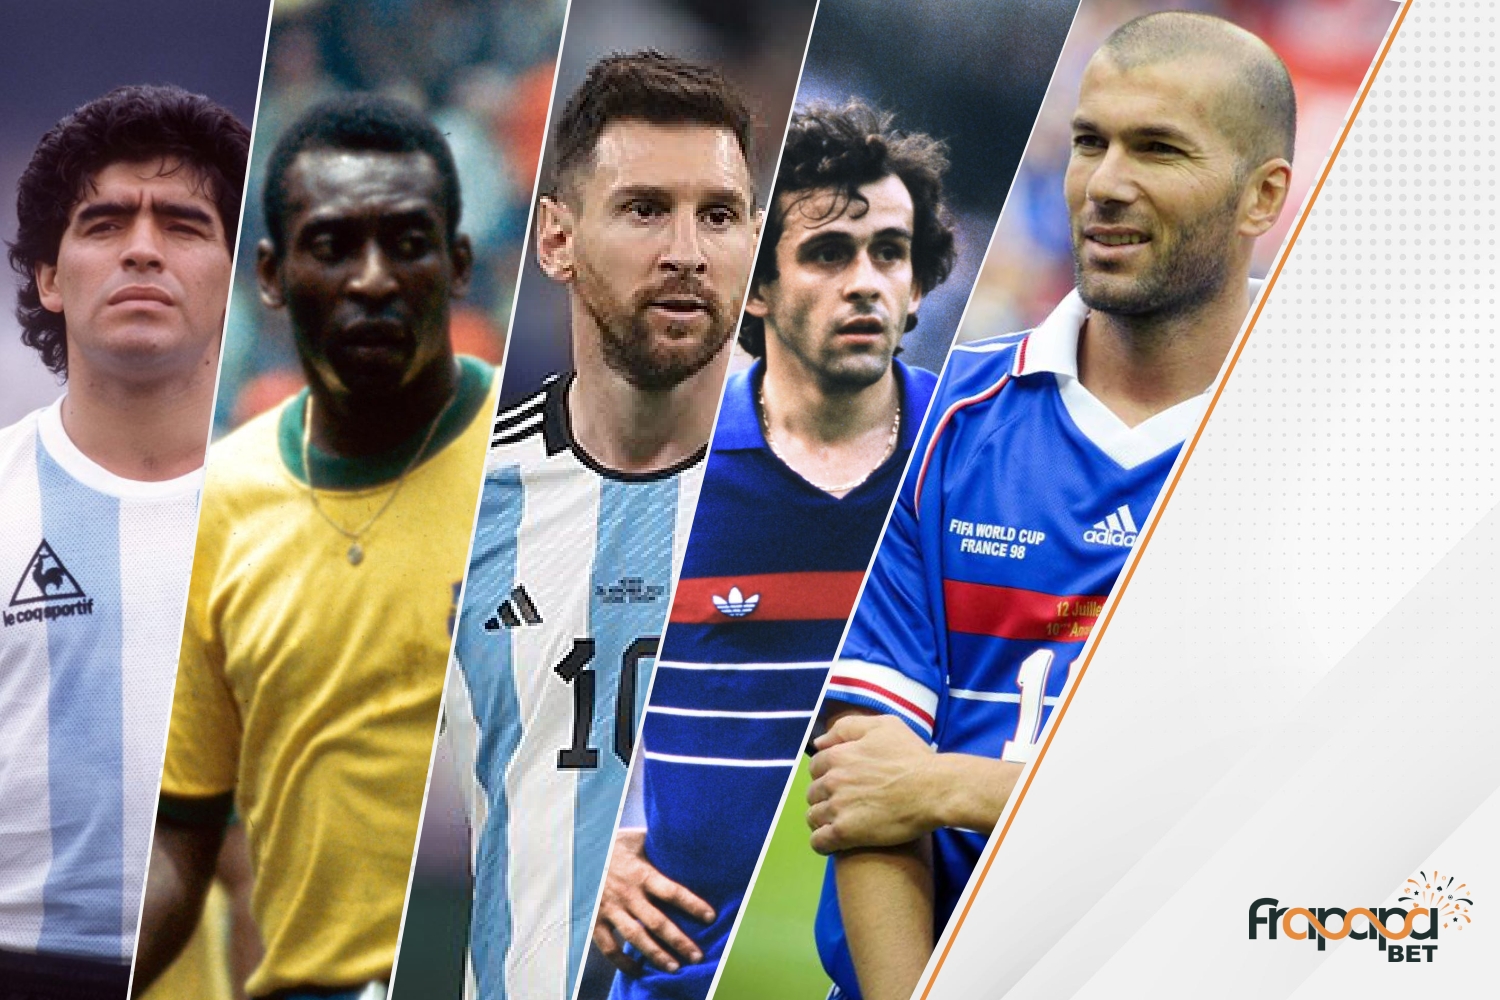 VIDEO: Messi, Ronaldo, Maradona, Cruyff, Zidane, Ronaldinho and many others  copy Pele - Free Press